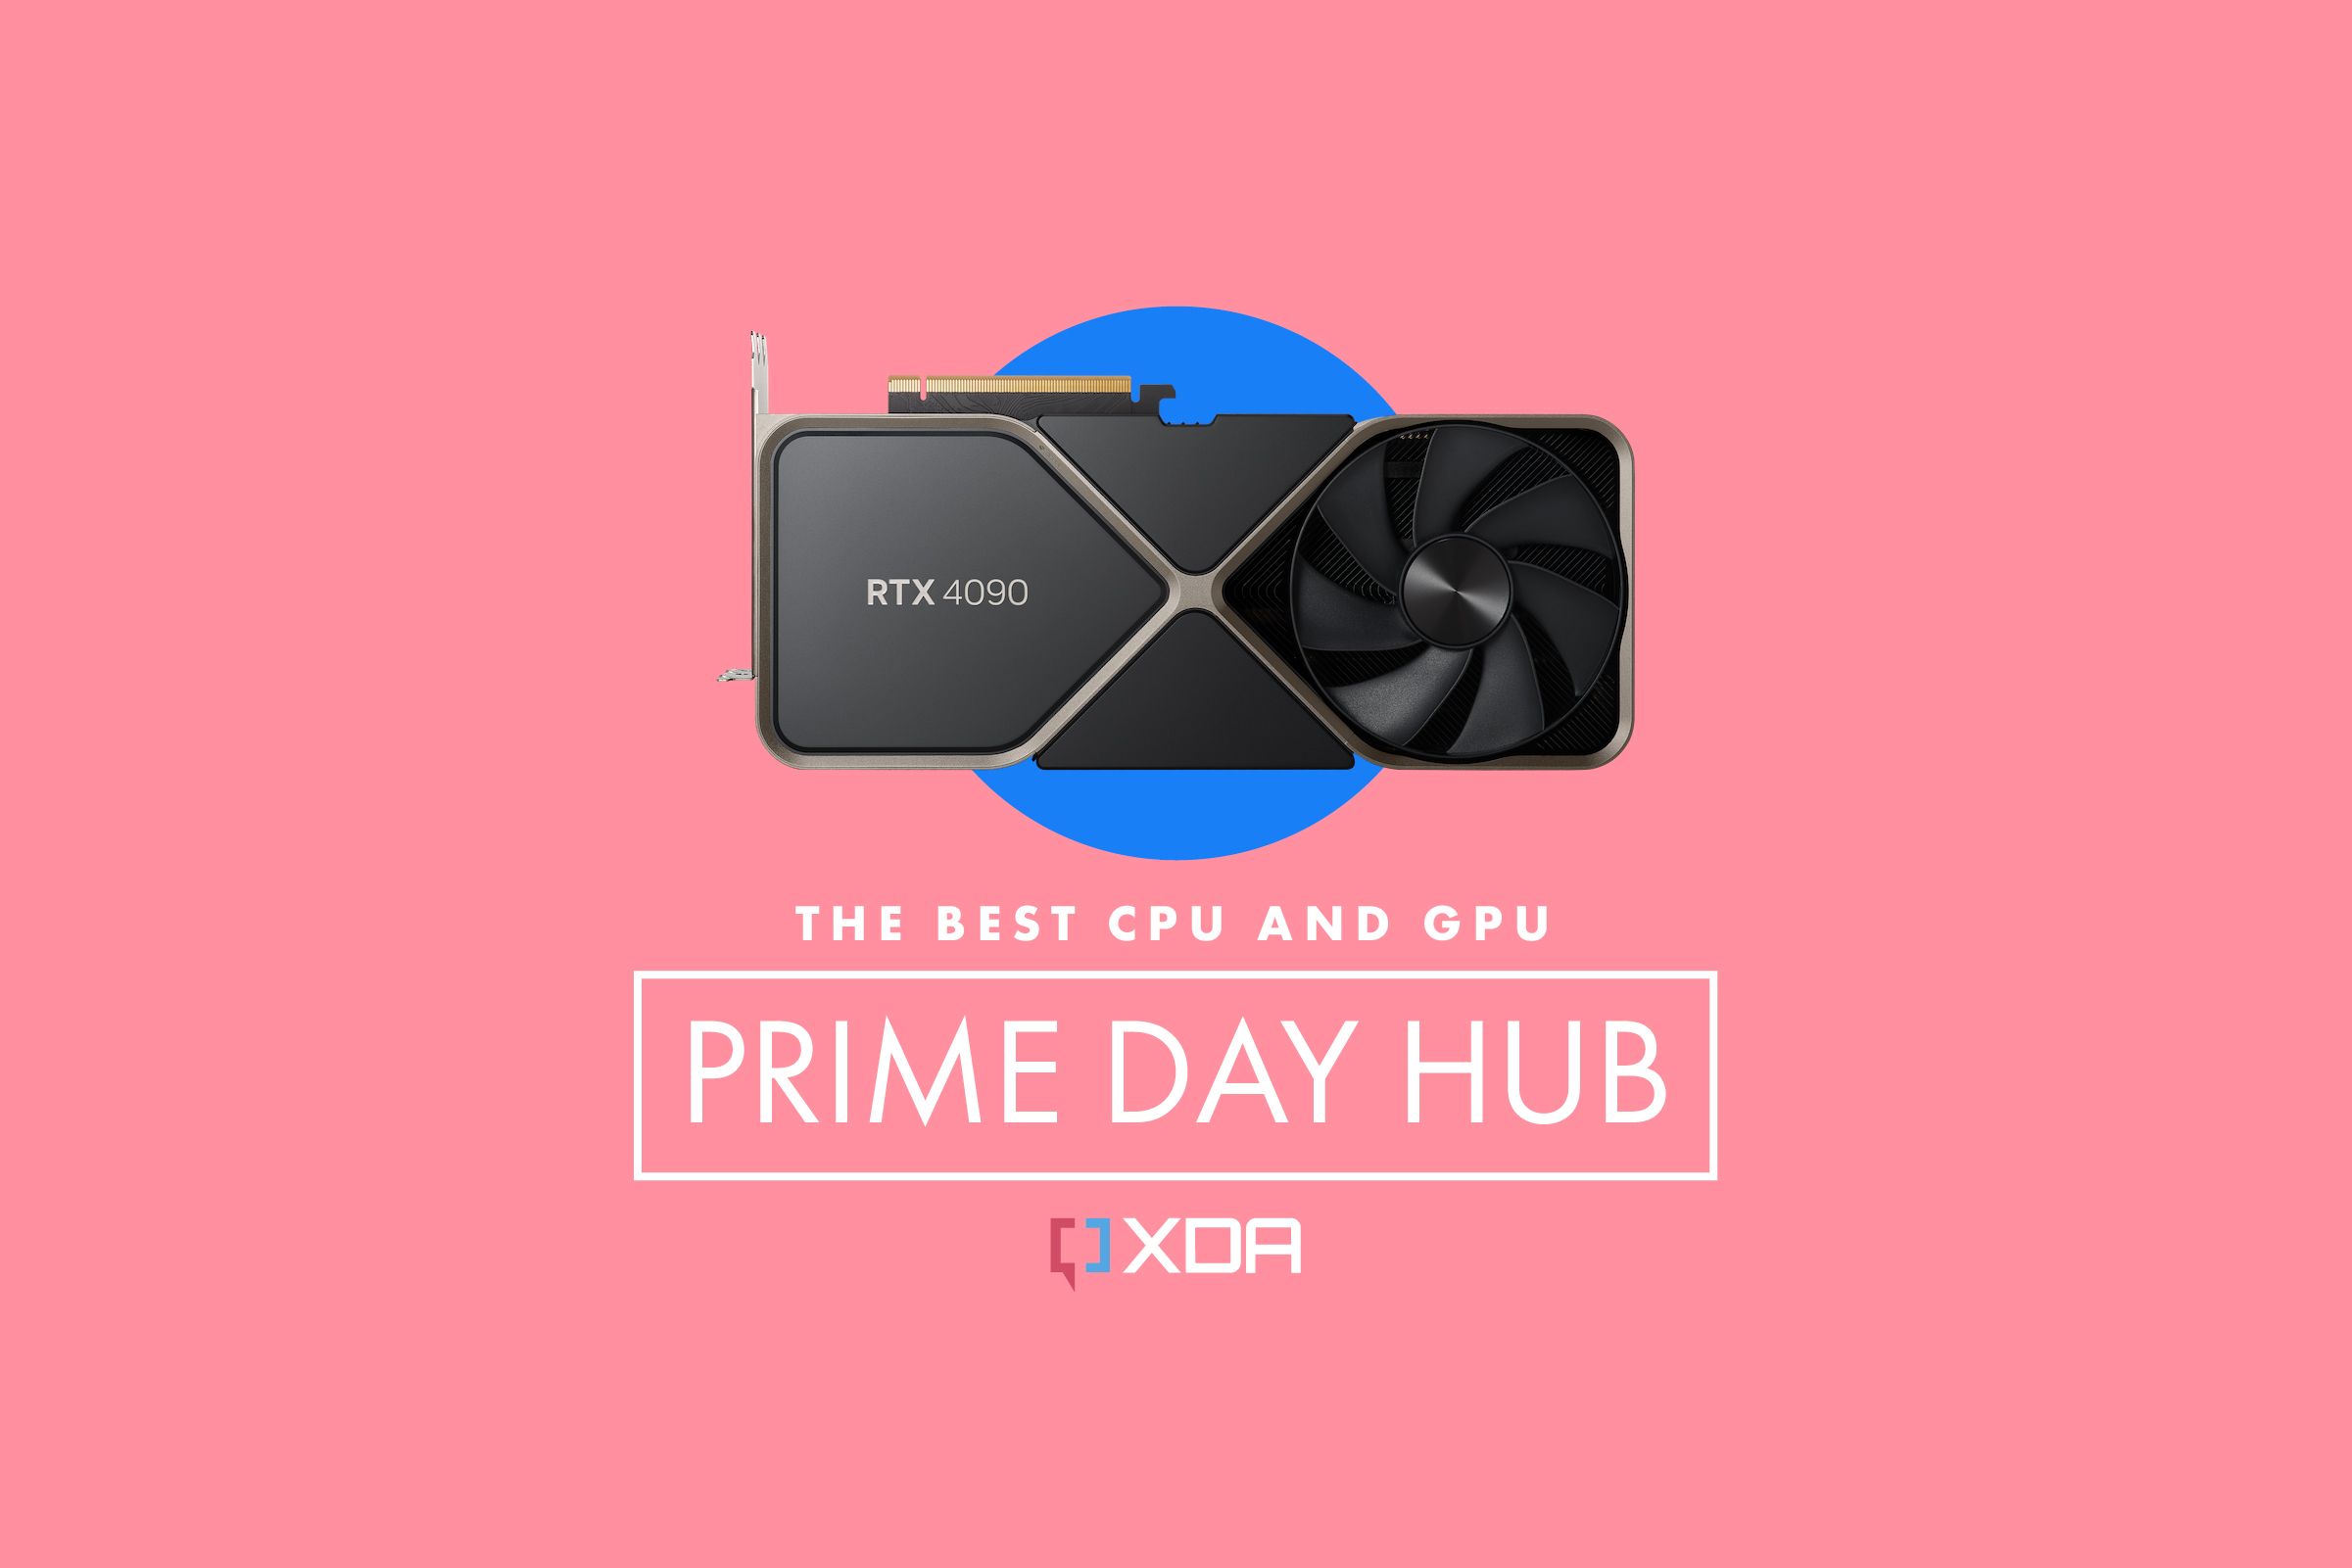 The best CPU and GPU Prime Day deals